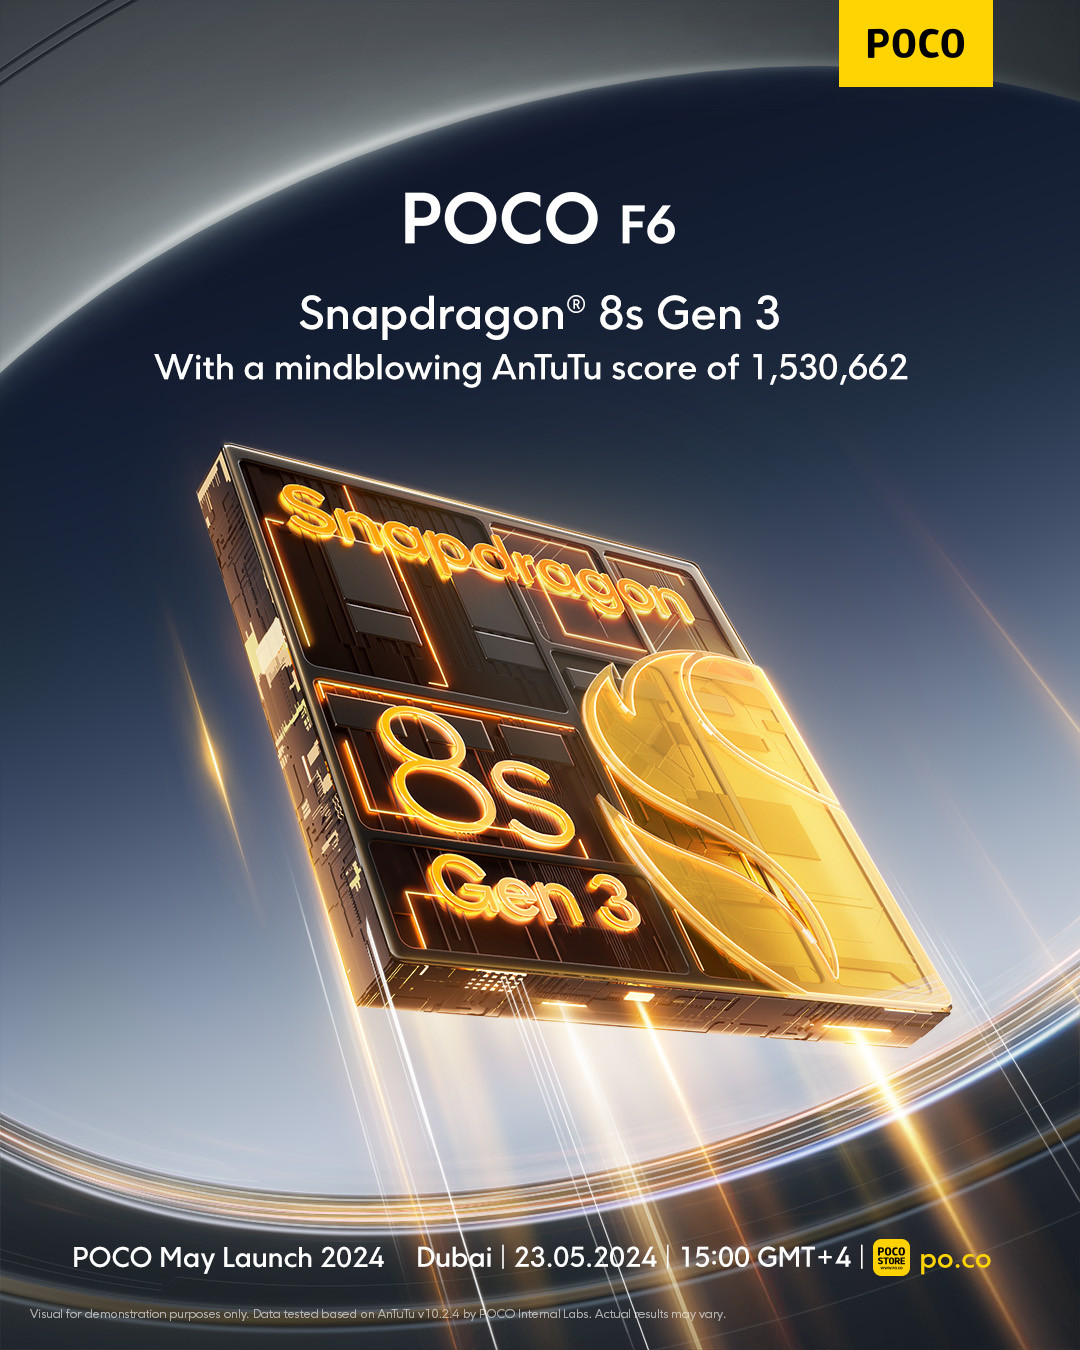 POCO F6 Snapdragon 8s Gen 3 AnTuTu score